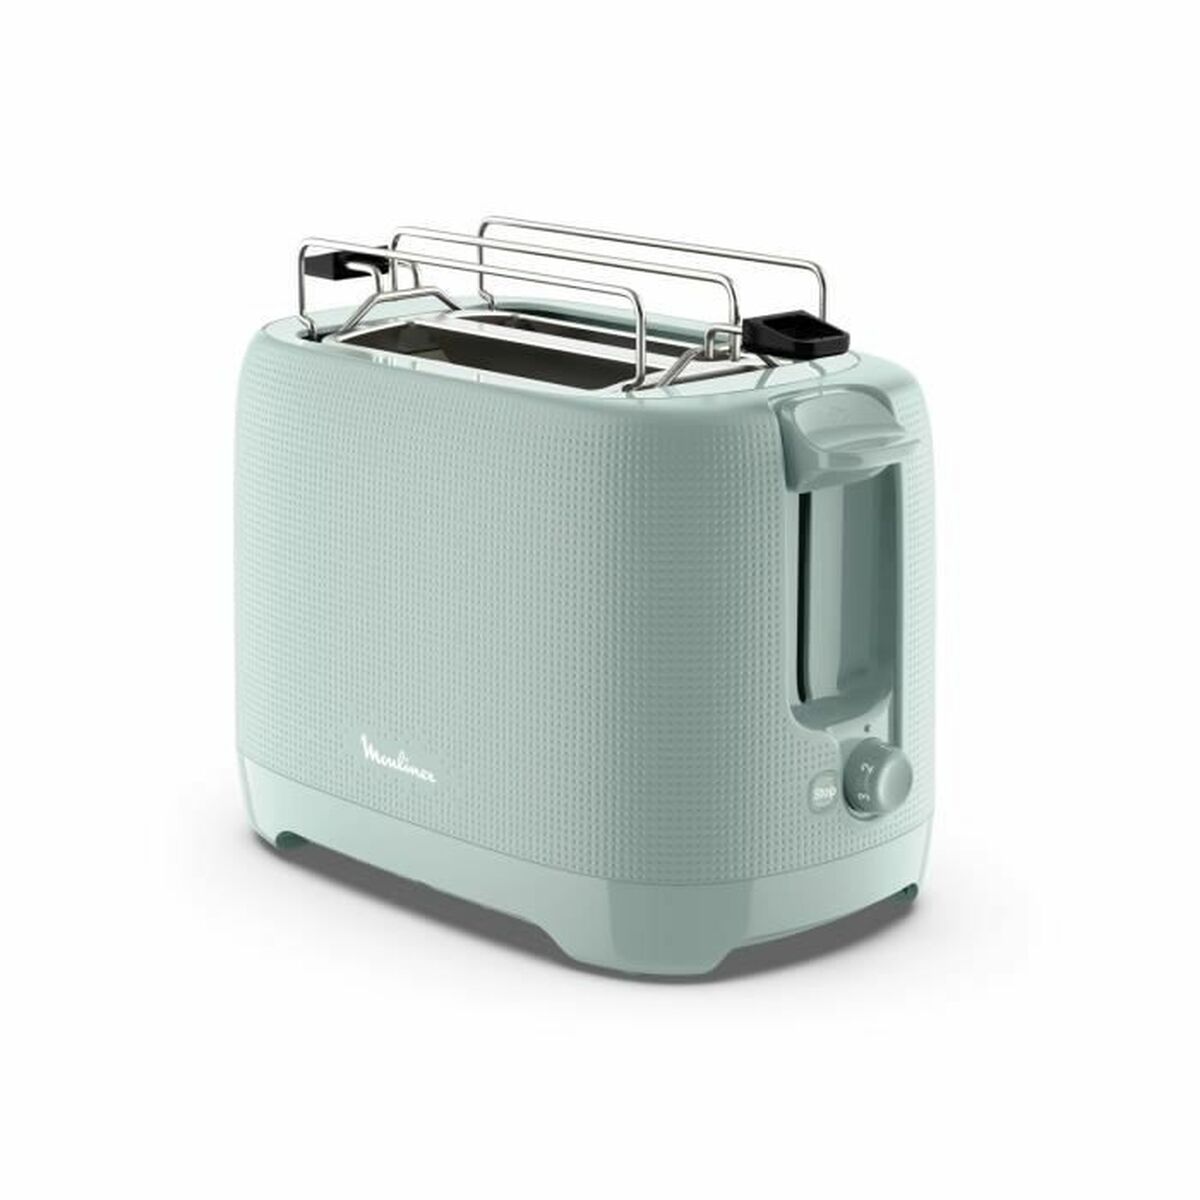 Kaufe Toaster Moulinex 850 W bei AWK Flagship um € 75.00